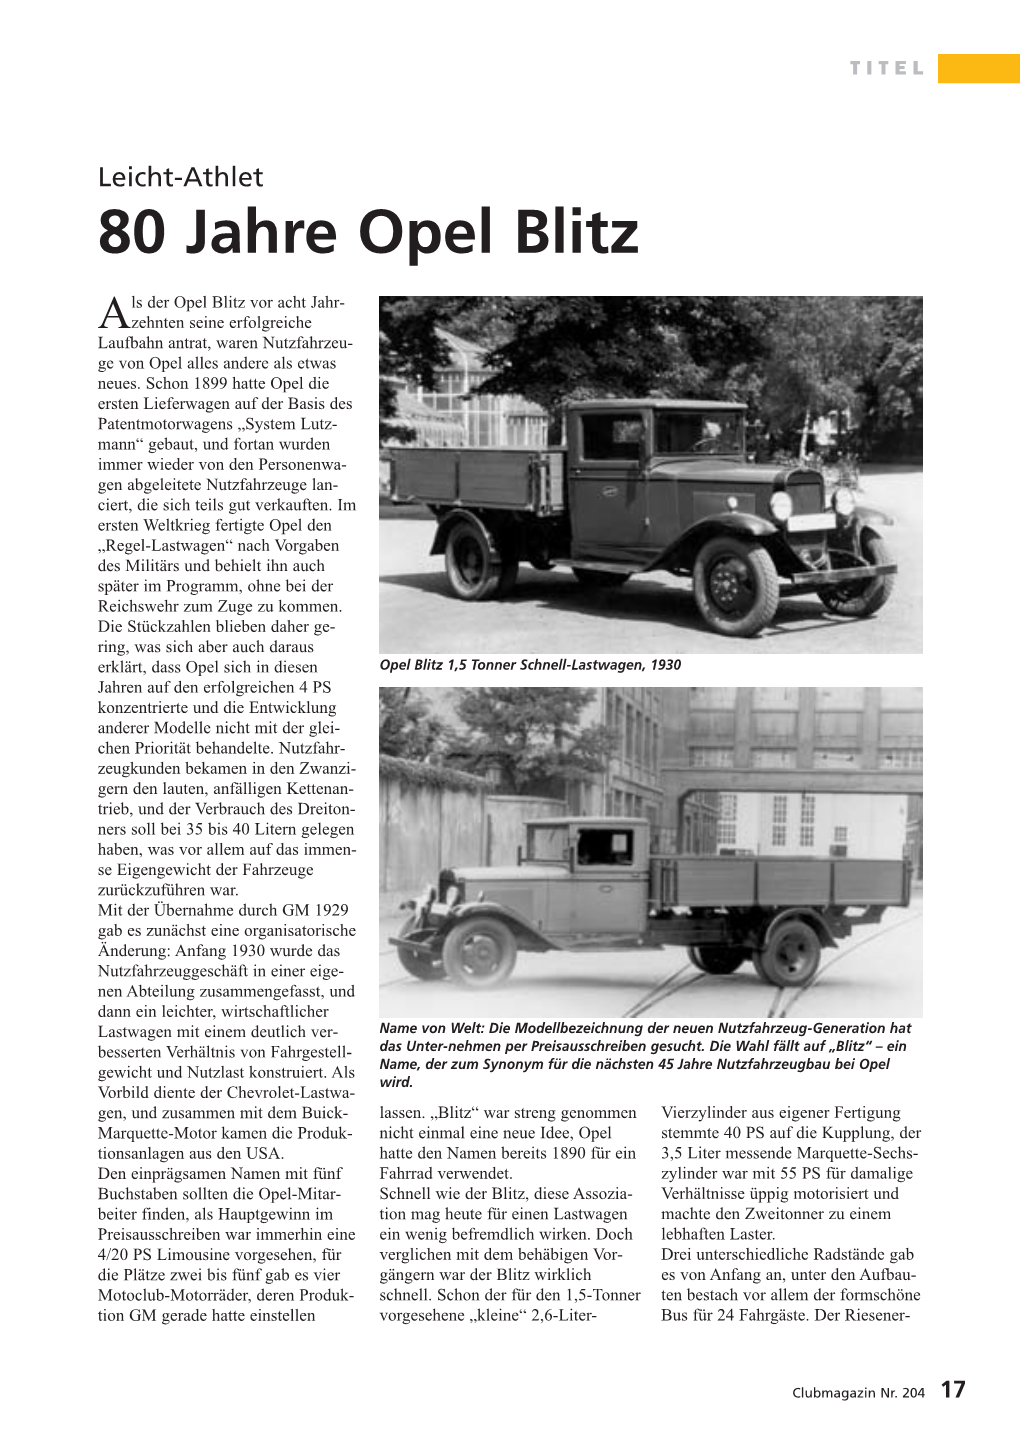 80 Jahre Opel Blitz